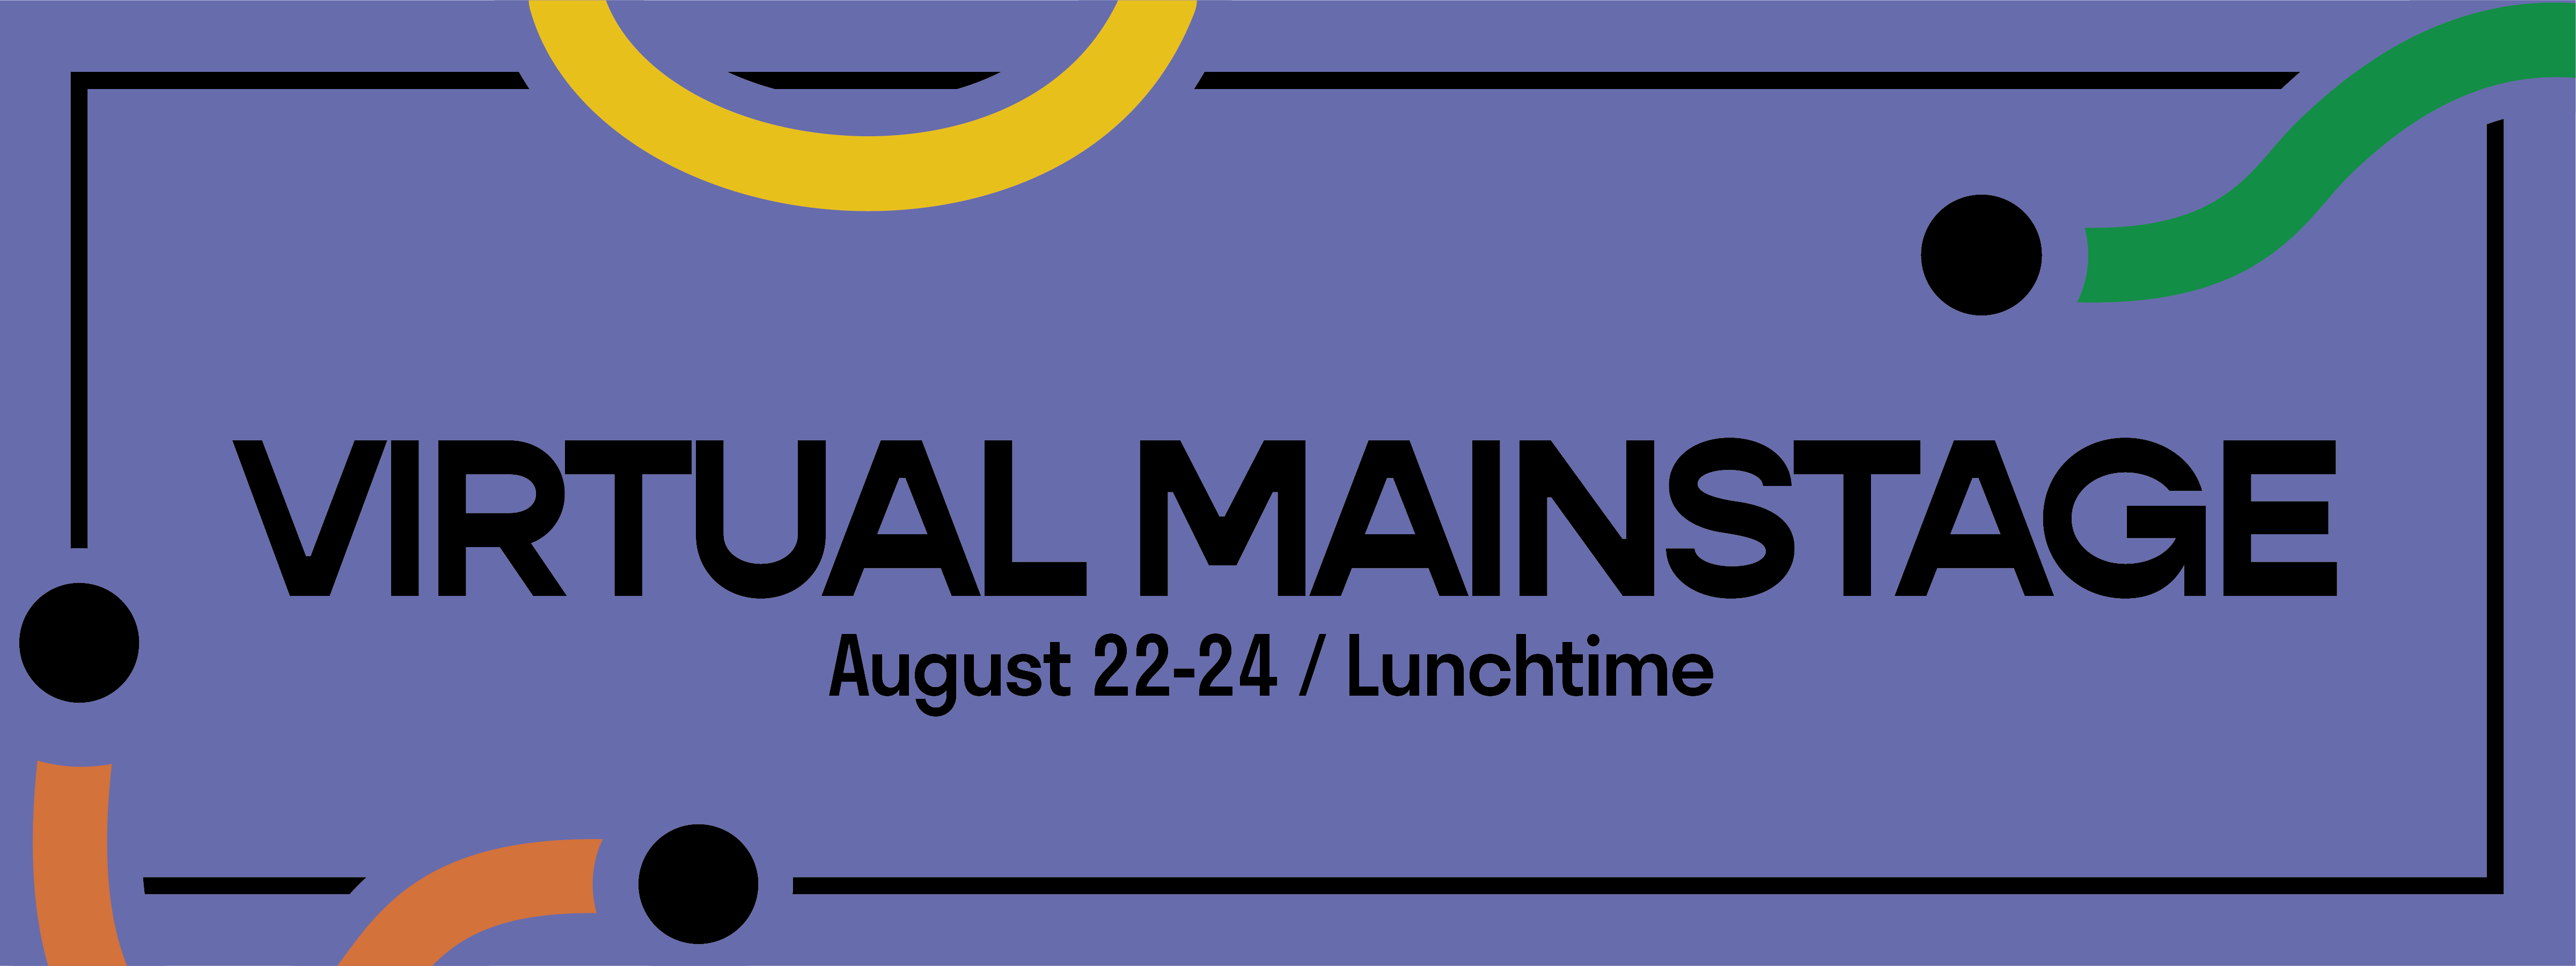 Seattle Design Festival Virtual Mainstage August 22-24